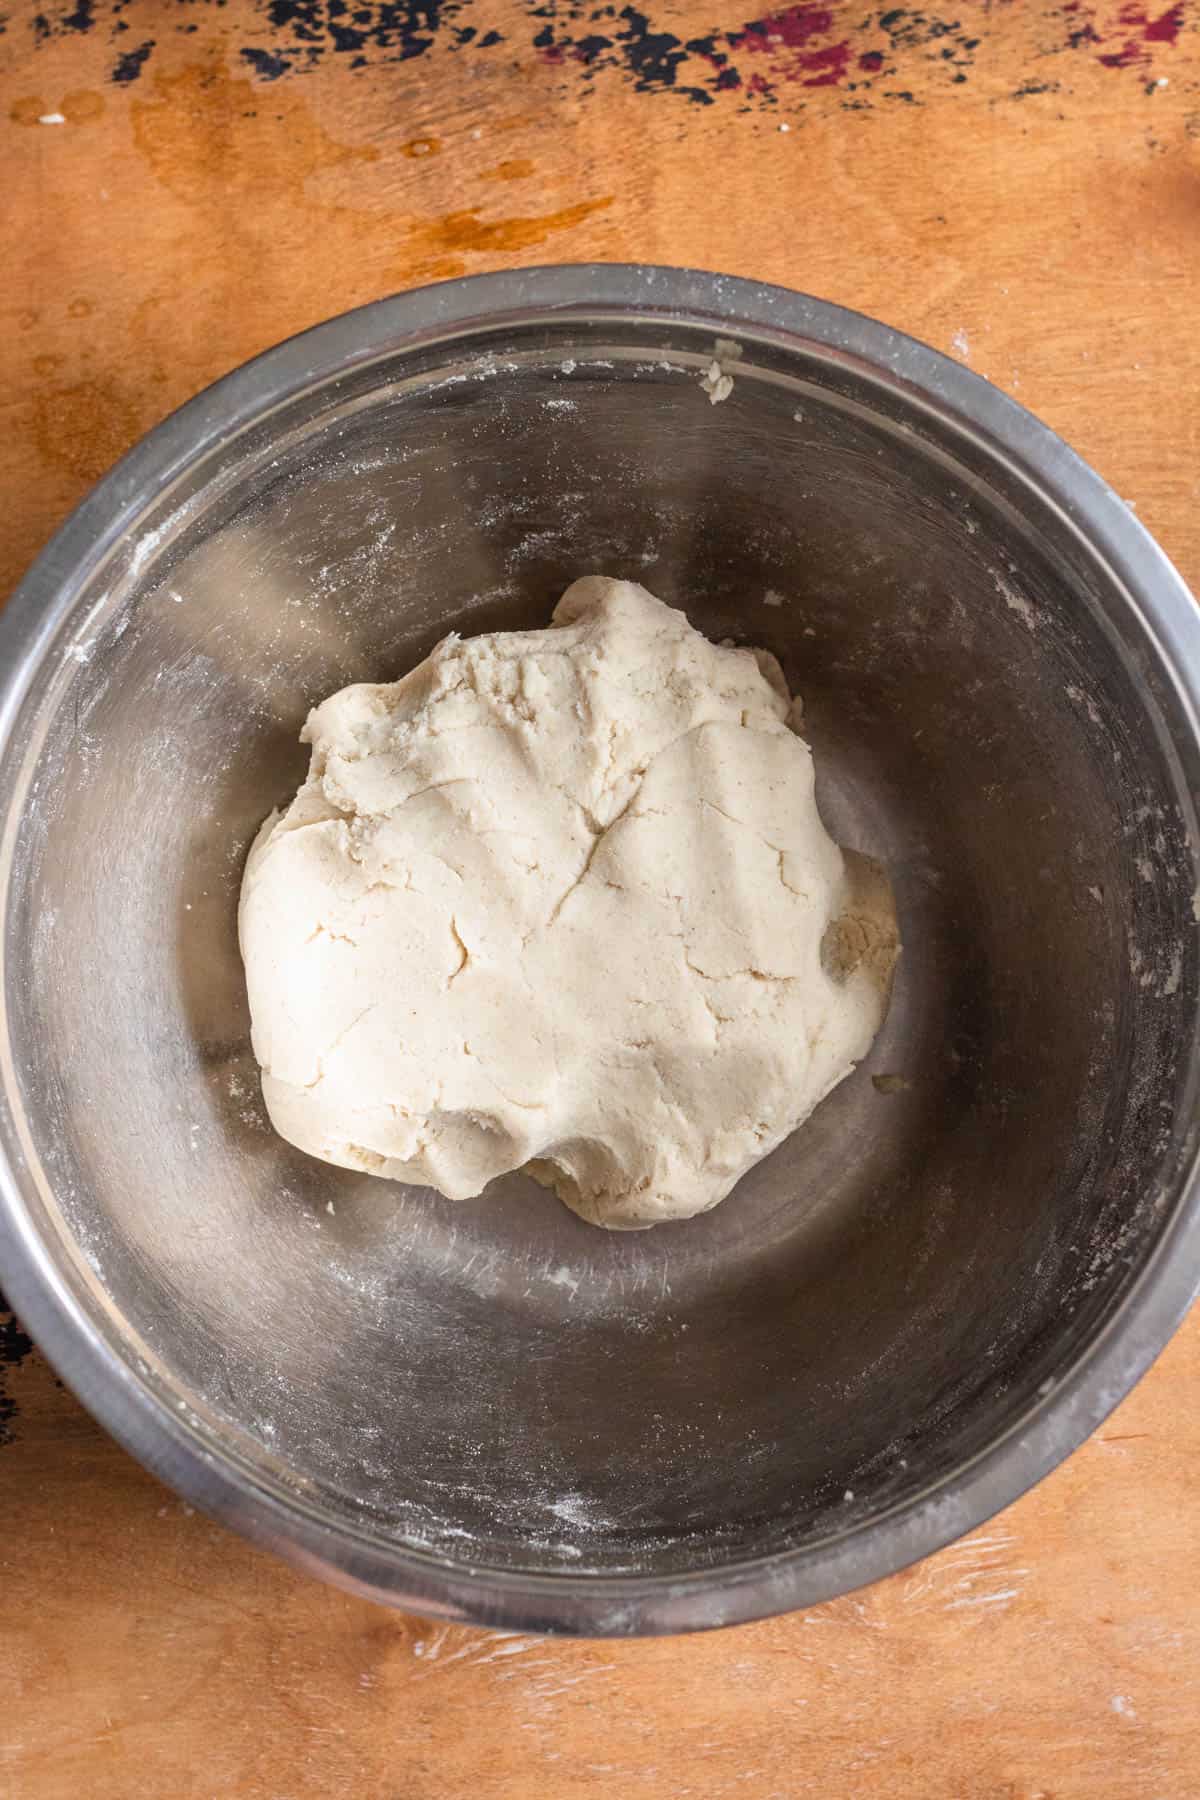 The picaditas dough in a mixing bowl.